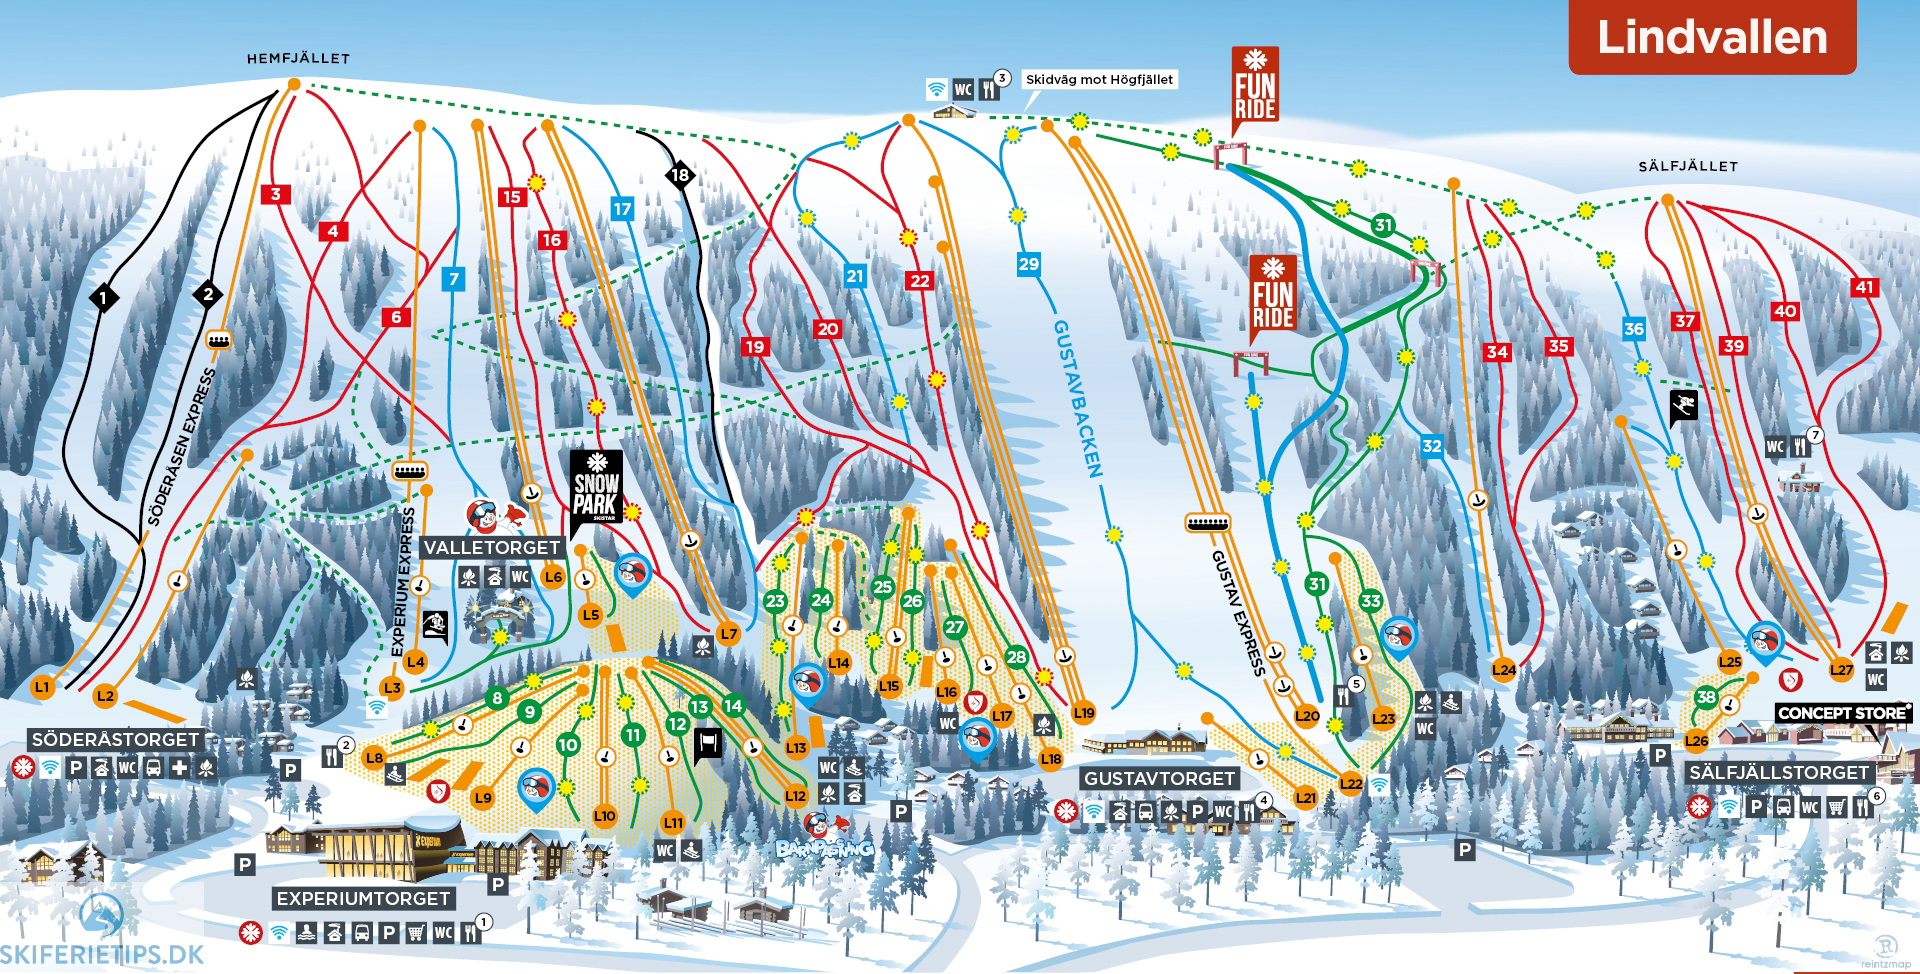 Pistekort - Se kort over pister og lifter på skisportssteder her